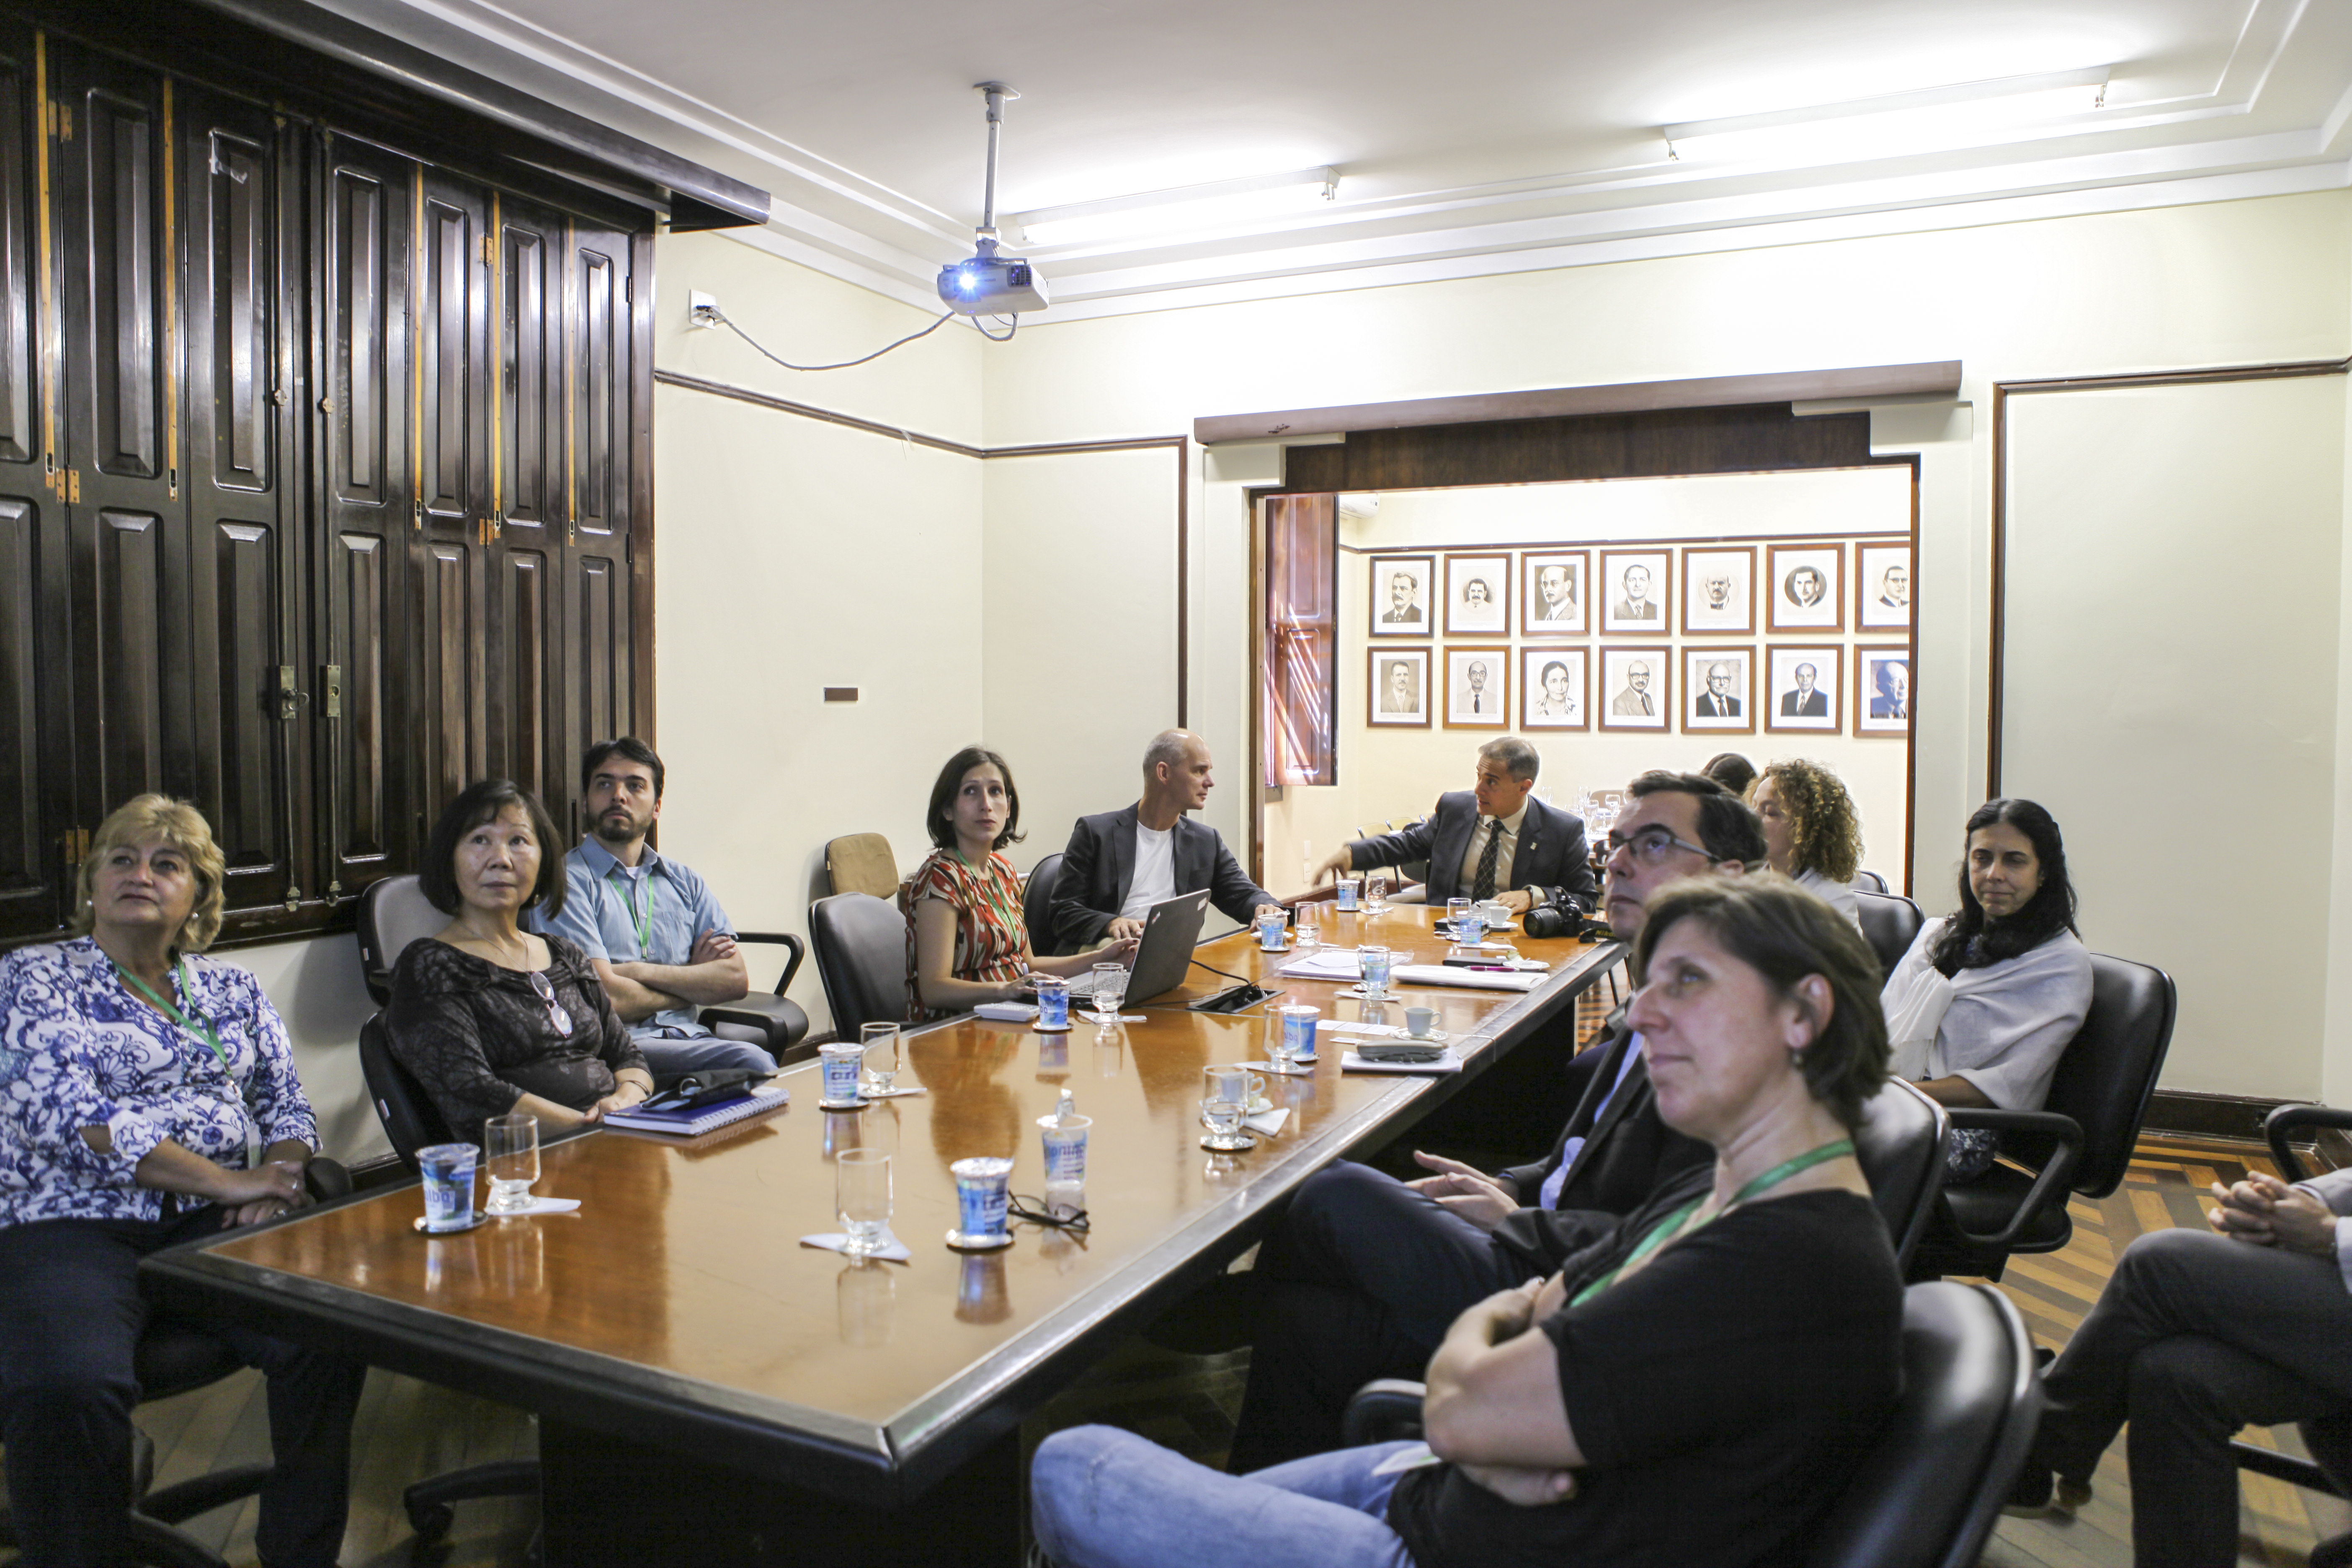 Presentation during the visit to Instituto Butantan in São Paulo